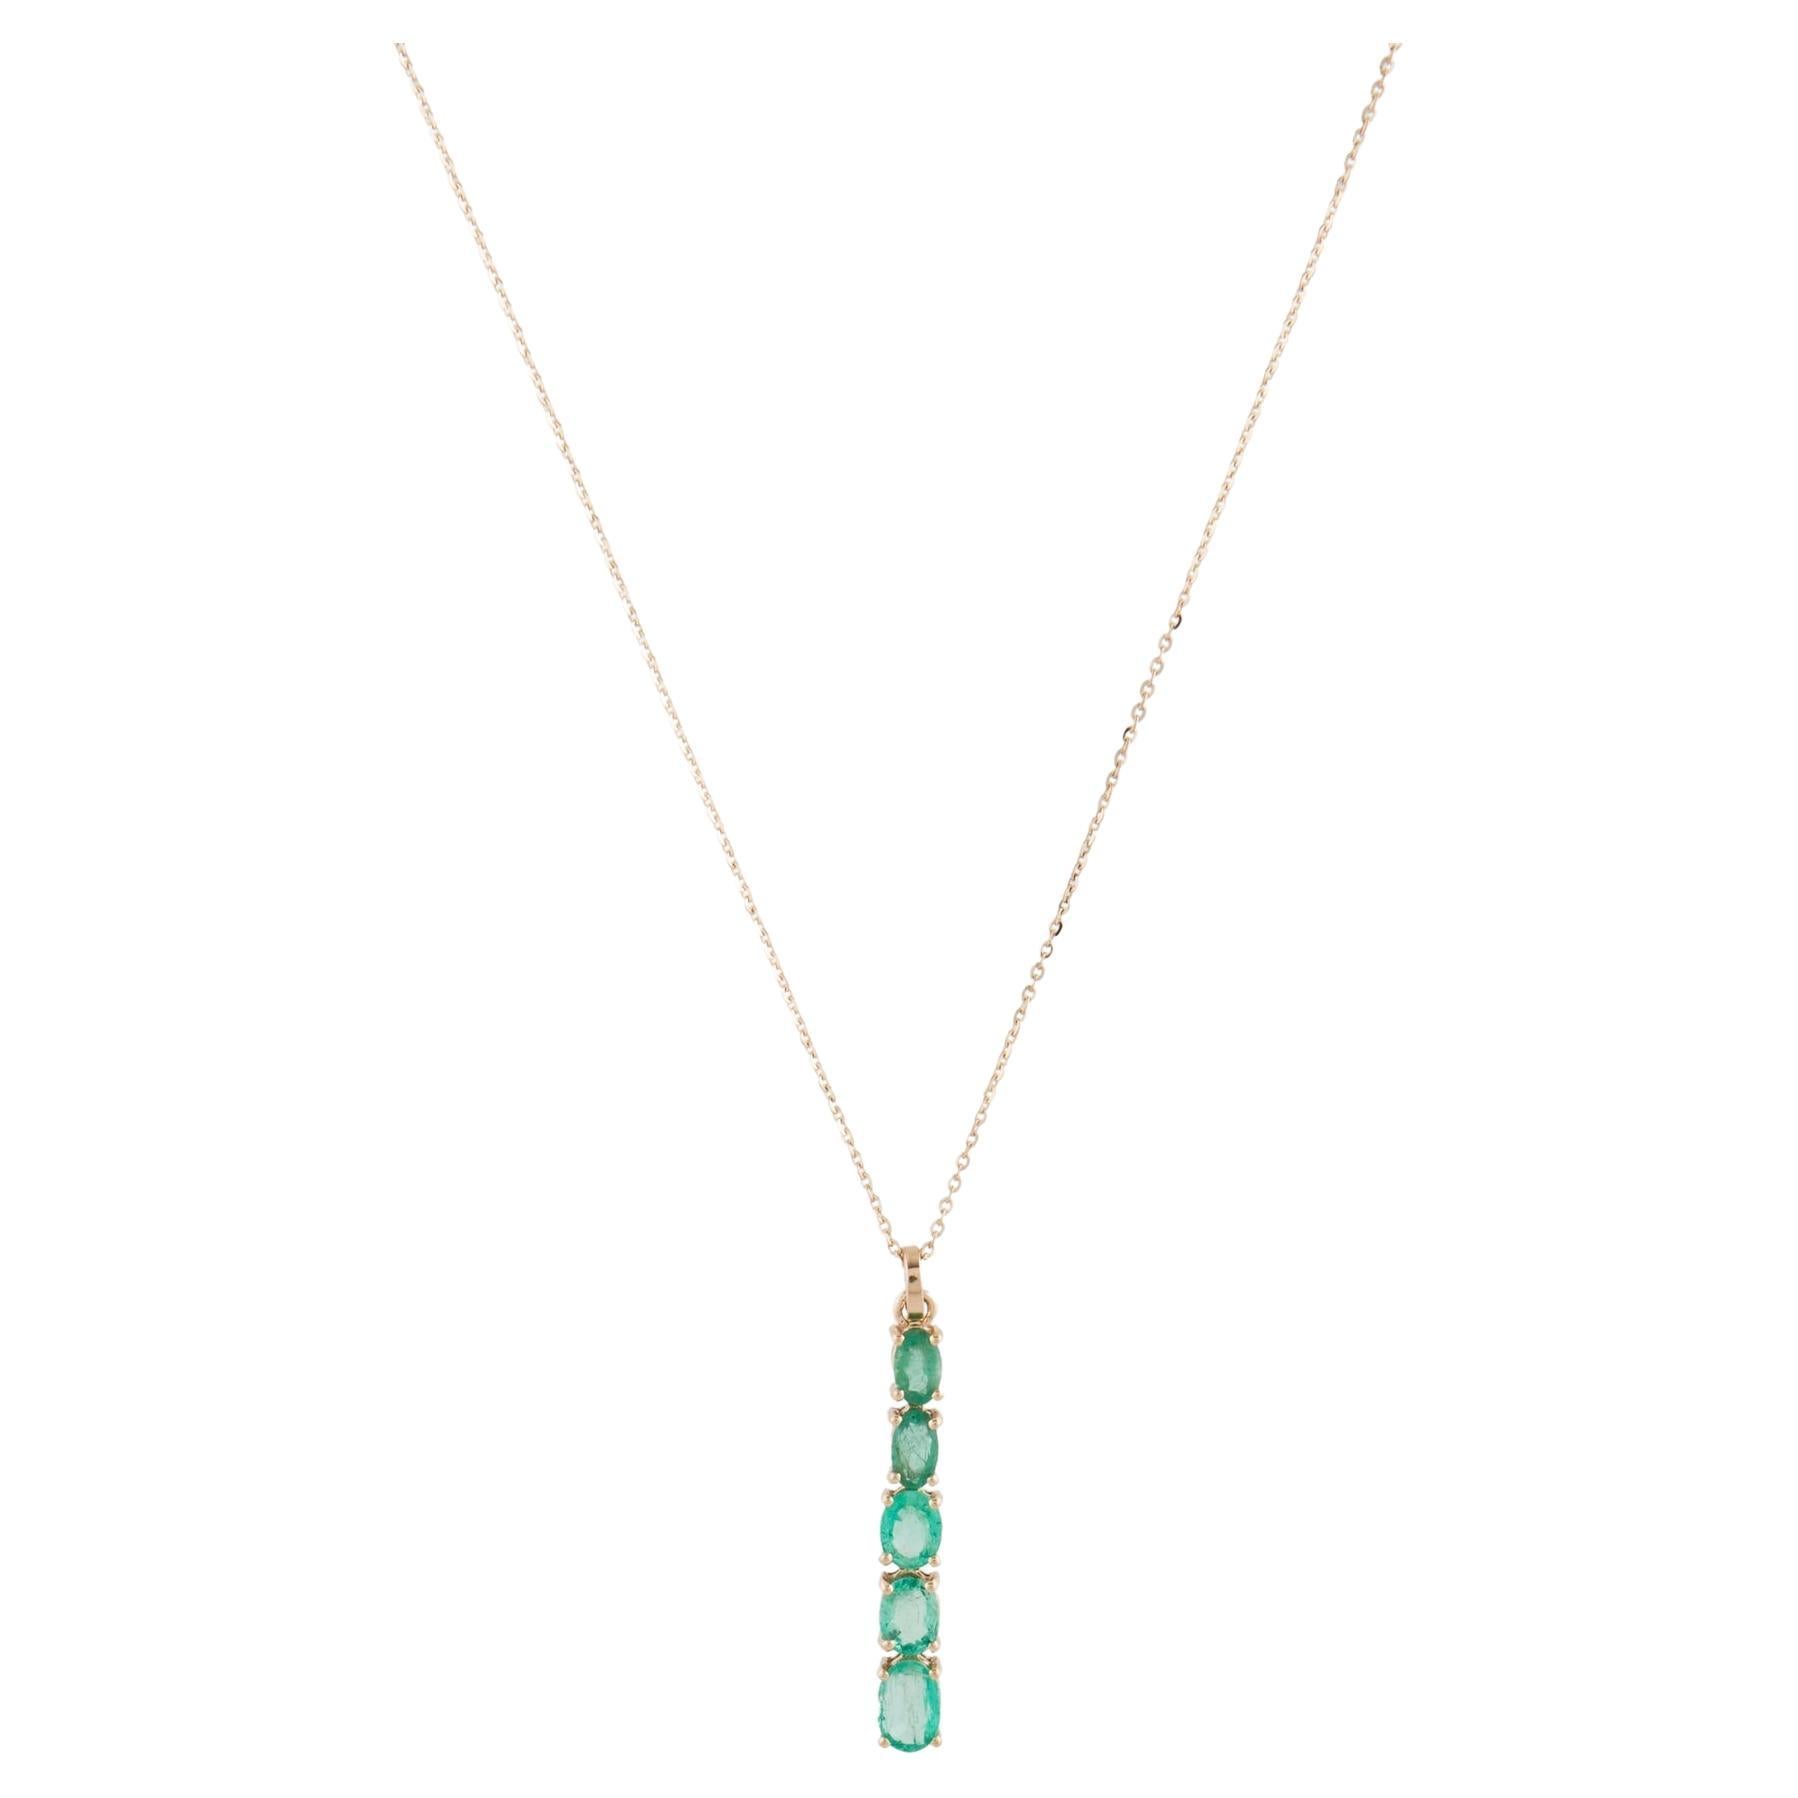 14K 1.44ctw Emerald Pendant Necklace: Elegant Luxury Statement Jewelry Piece